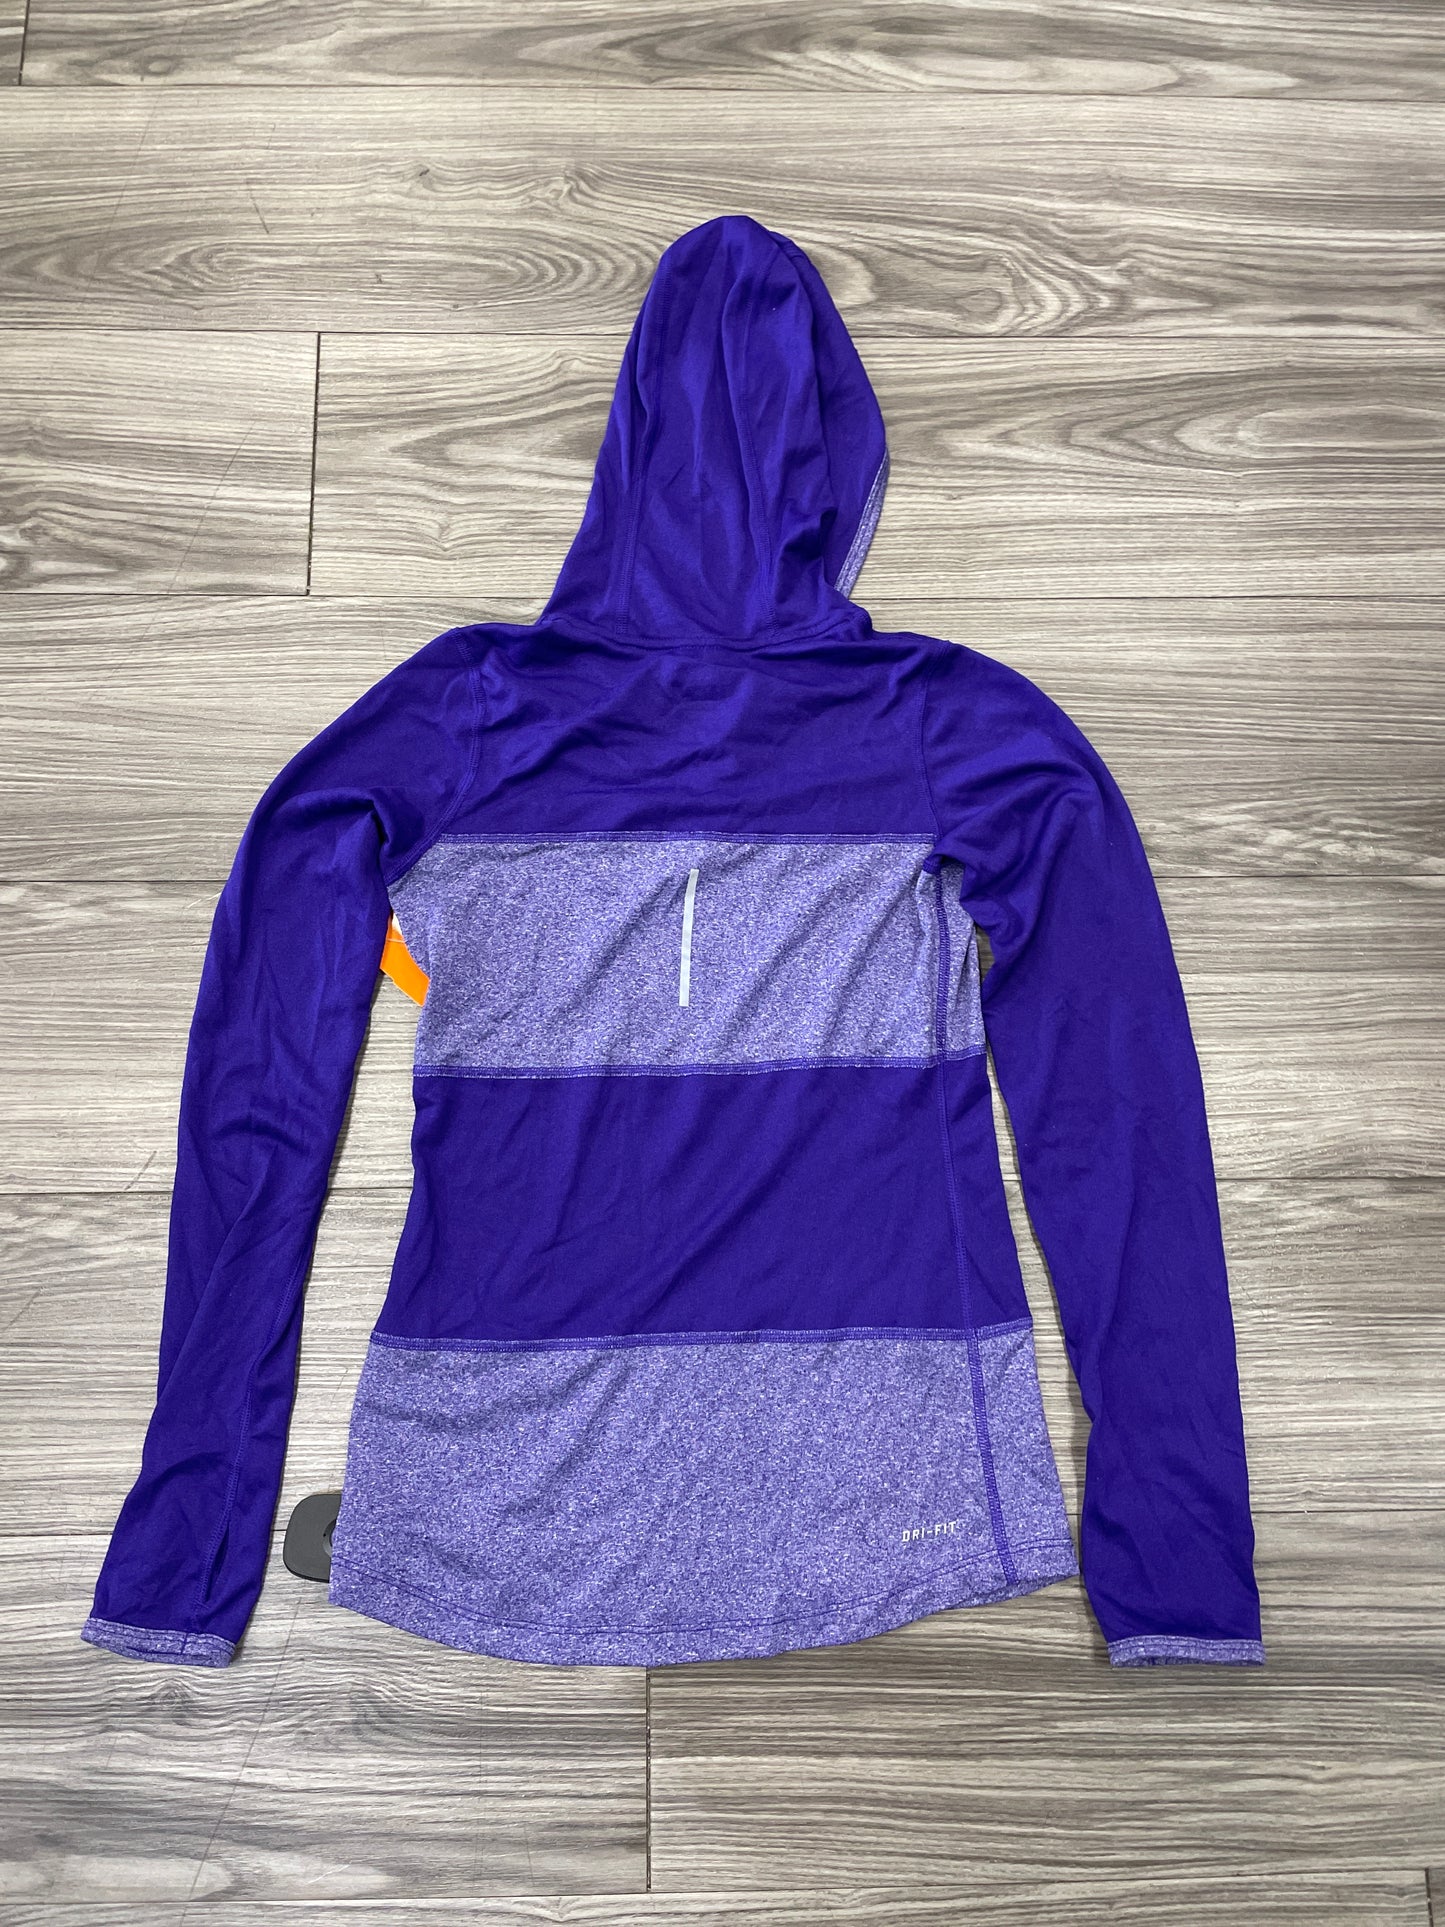 Athletic Top Long Sleeve Hoodie By Nike  Size: Xs